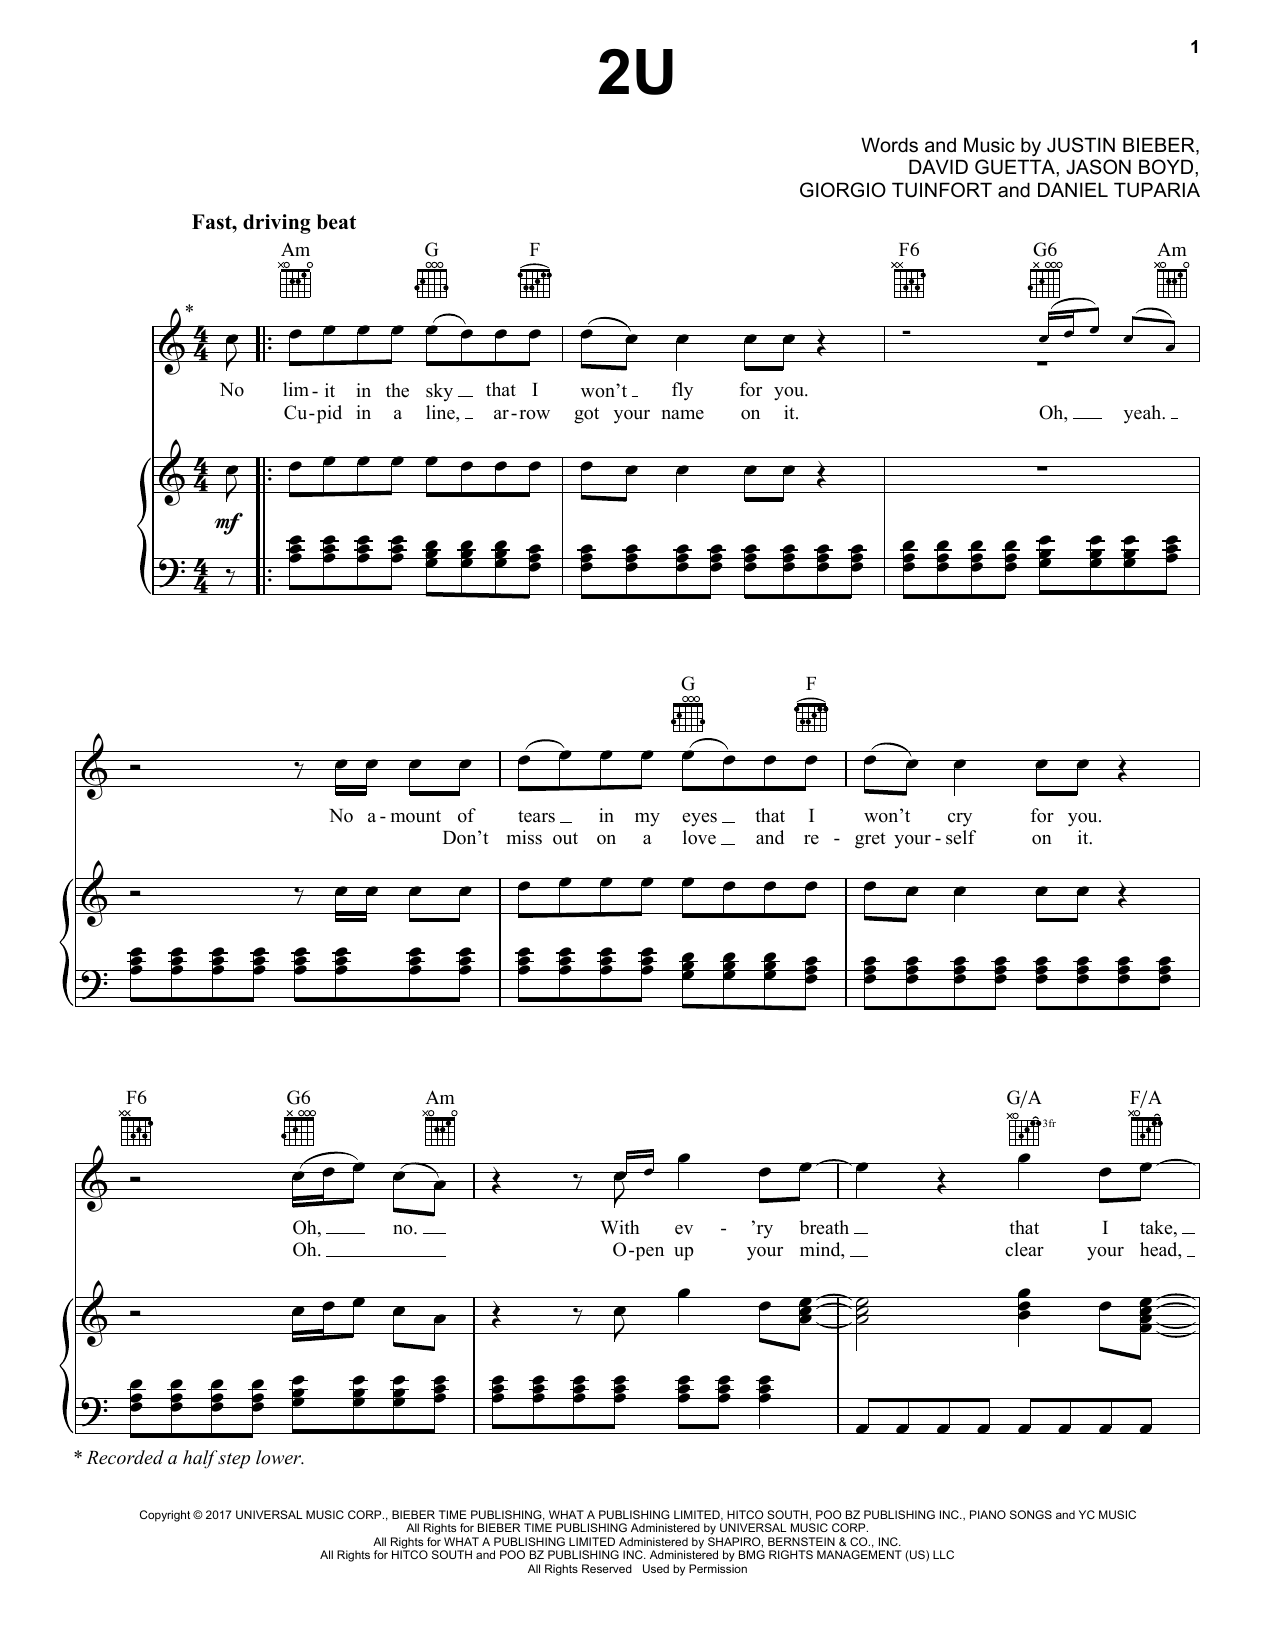 Justin Bieber & David Guetta 2U sheet music notes and chords arranged for Beginner Piano